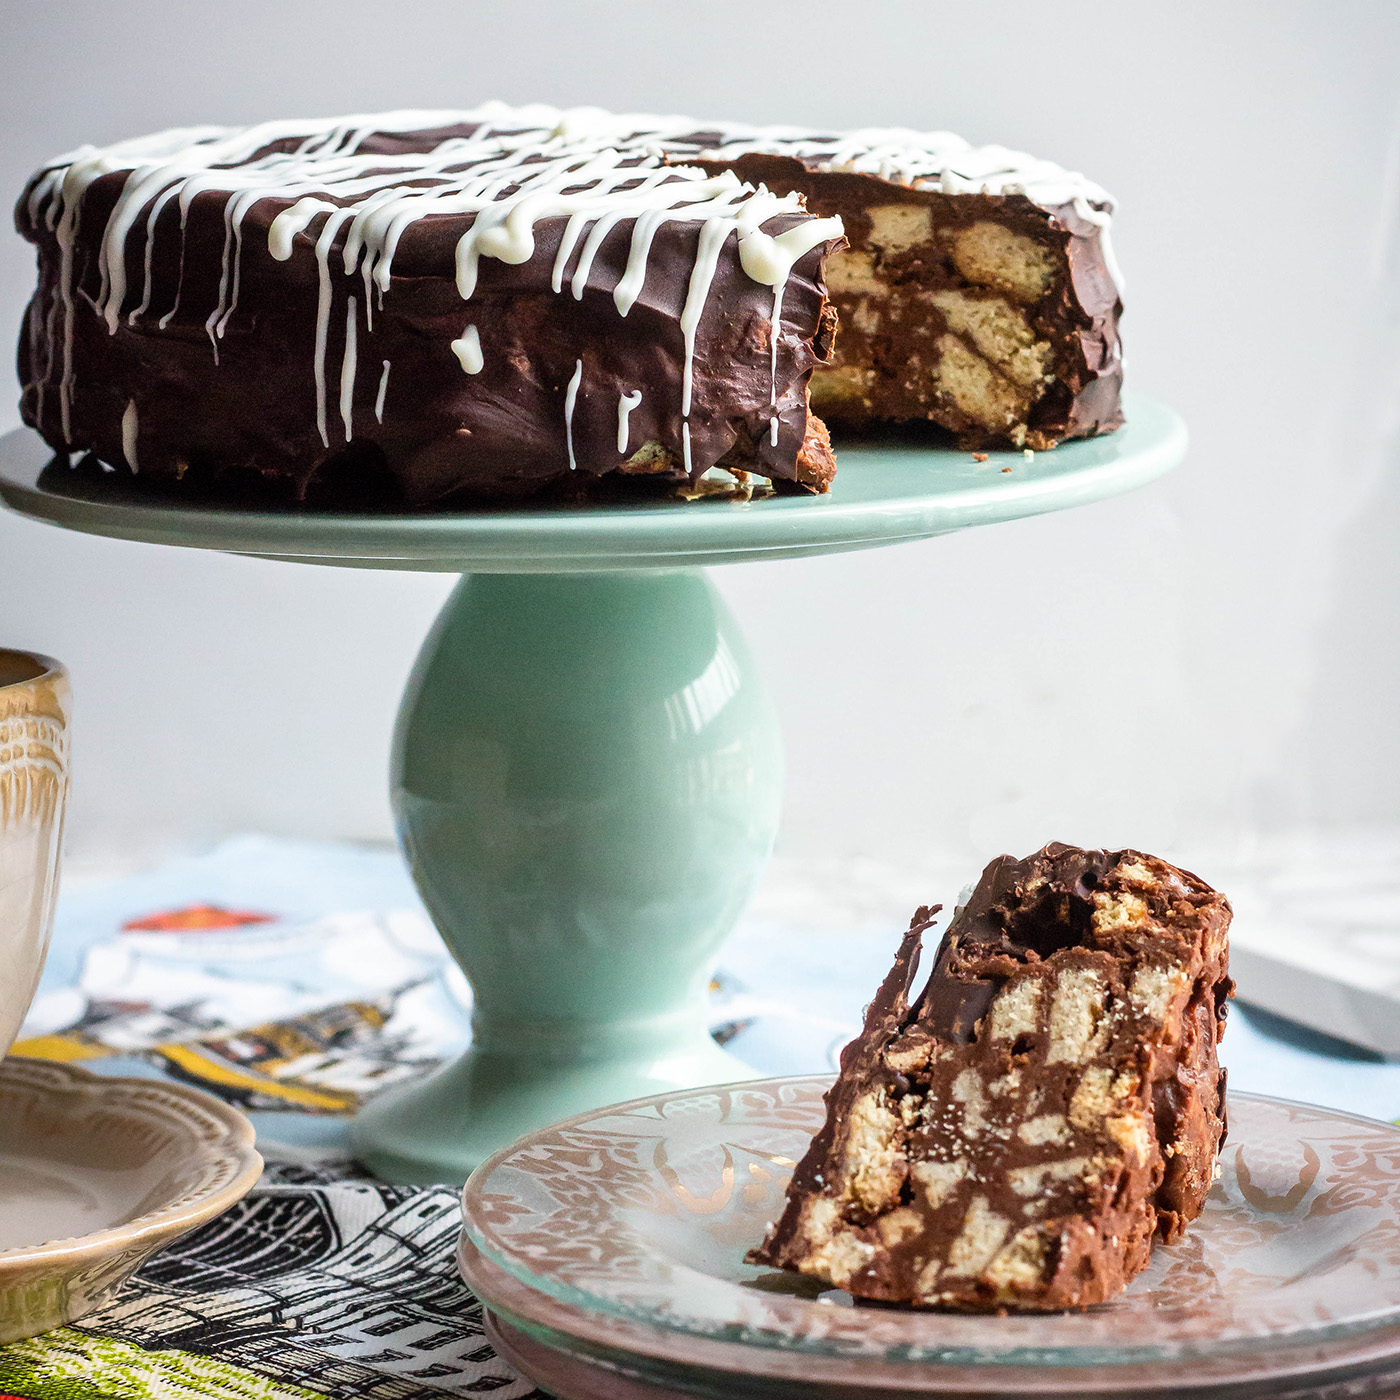 Queen Elizabeth's Favorite Cake: Chocolate Biscuit Cake